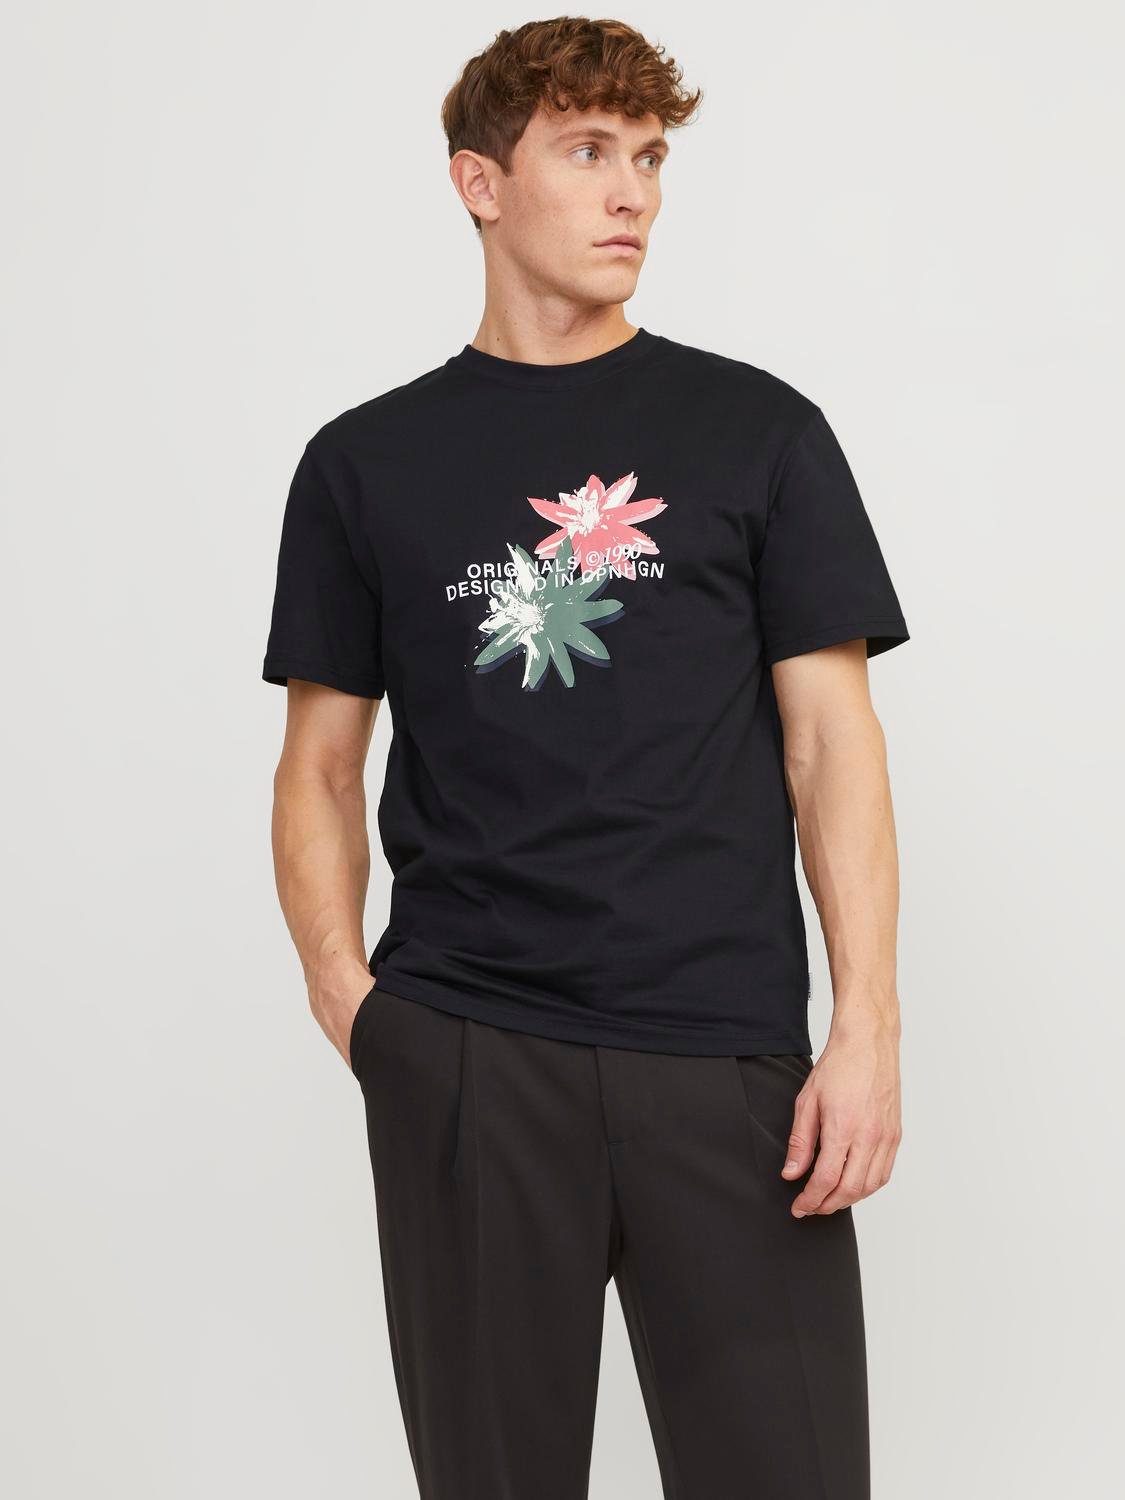 JACK & JONES ORIGINALS T-shirt JORTAMPA met printopdruk laurel wreath